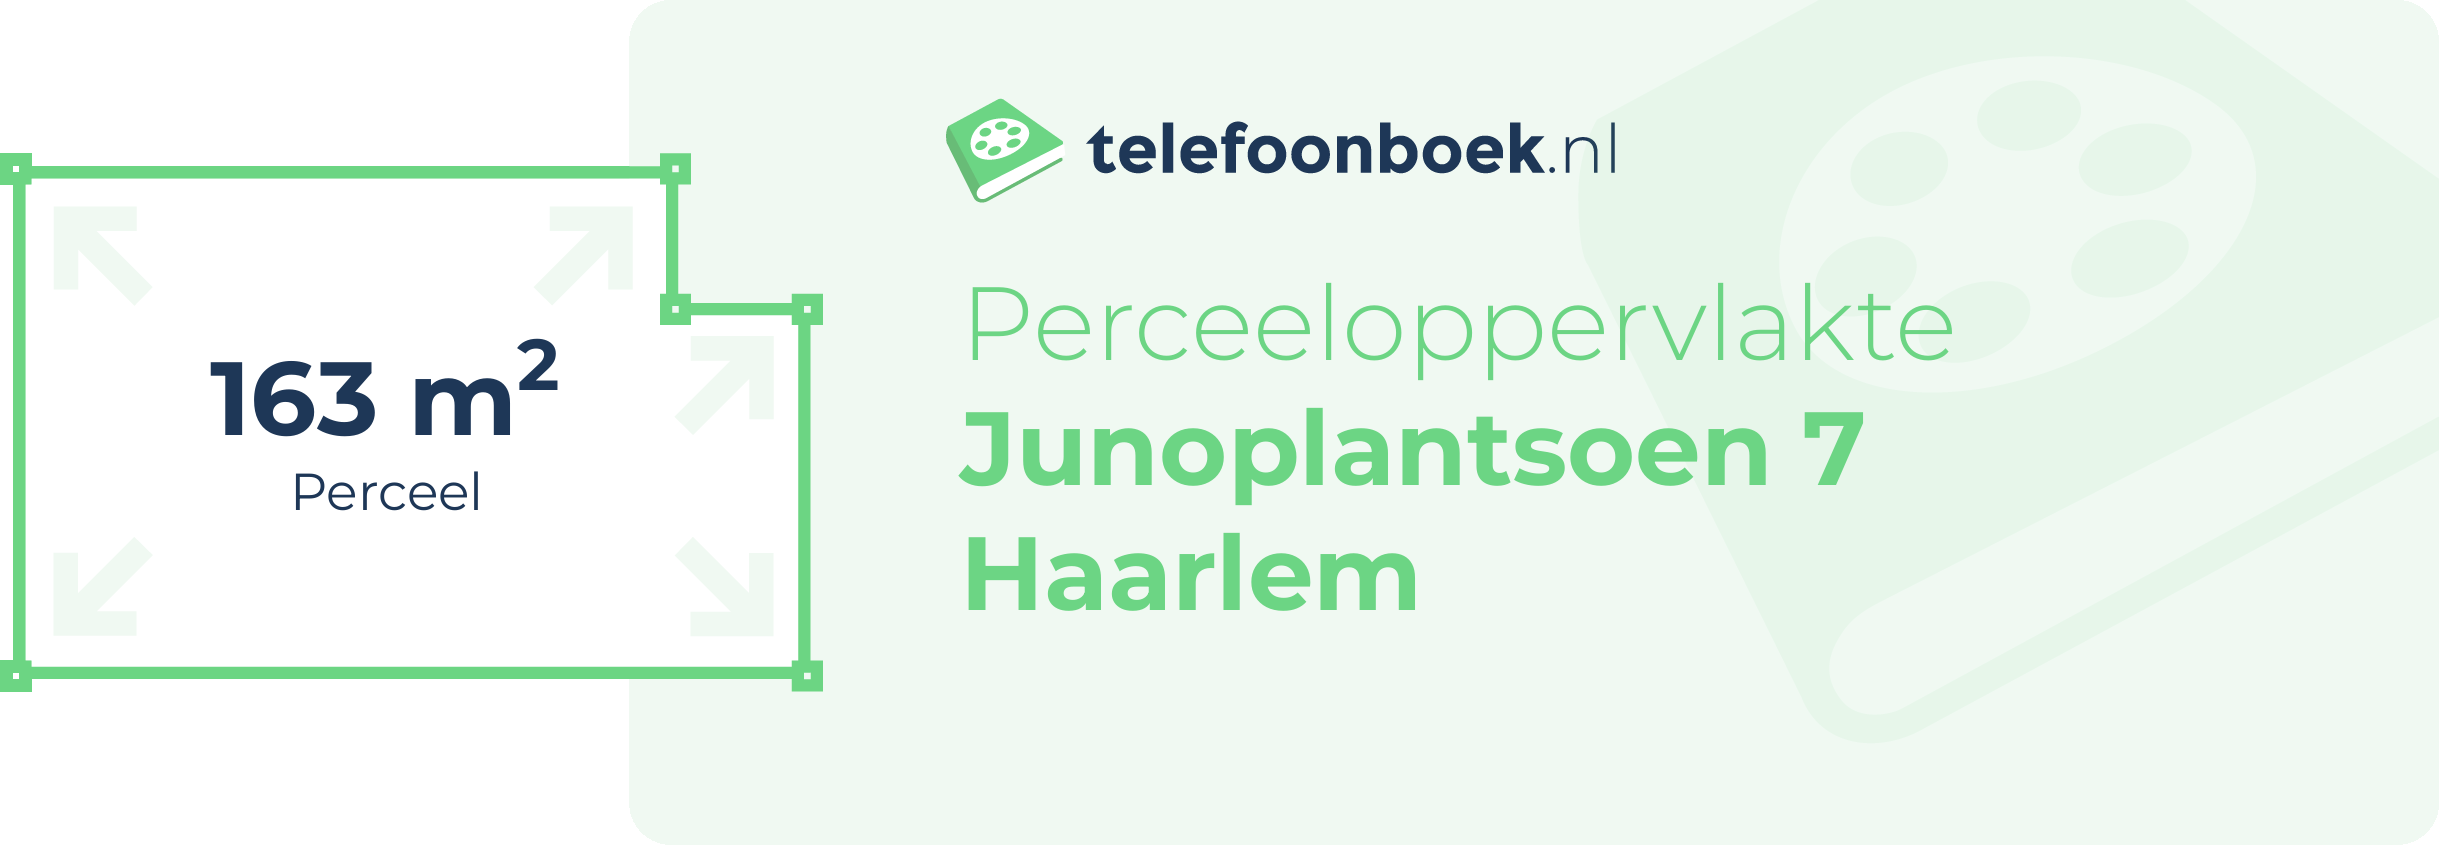 Perceeloppervlakte Junoplantsoen 7 Haarlem